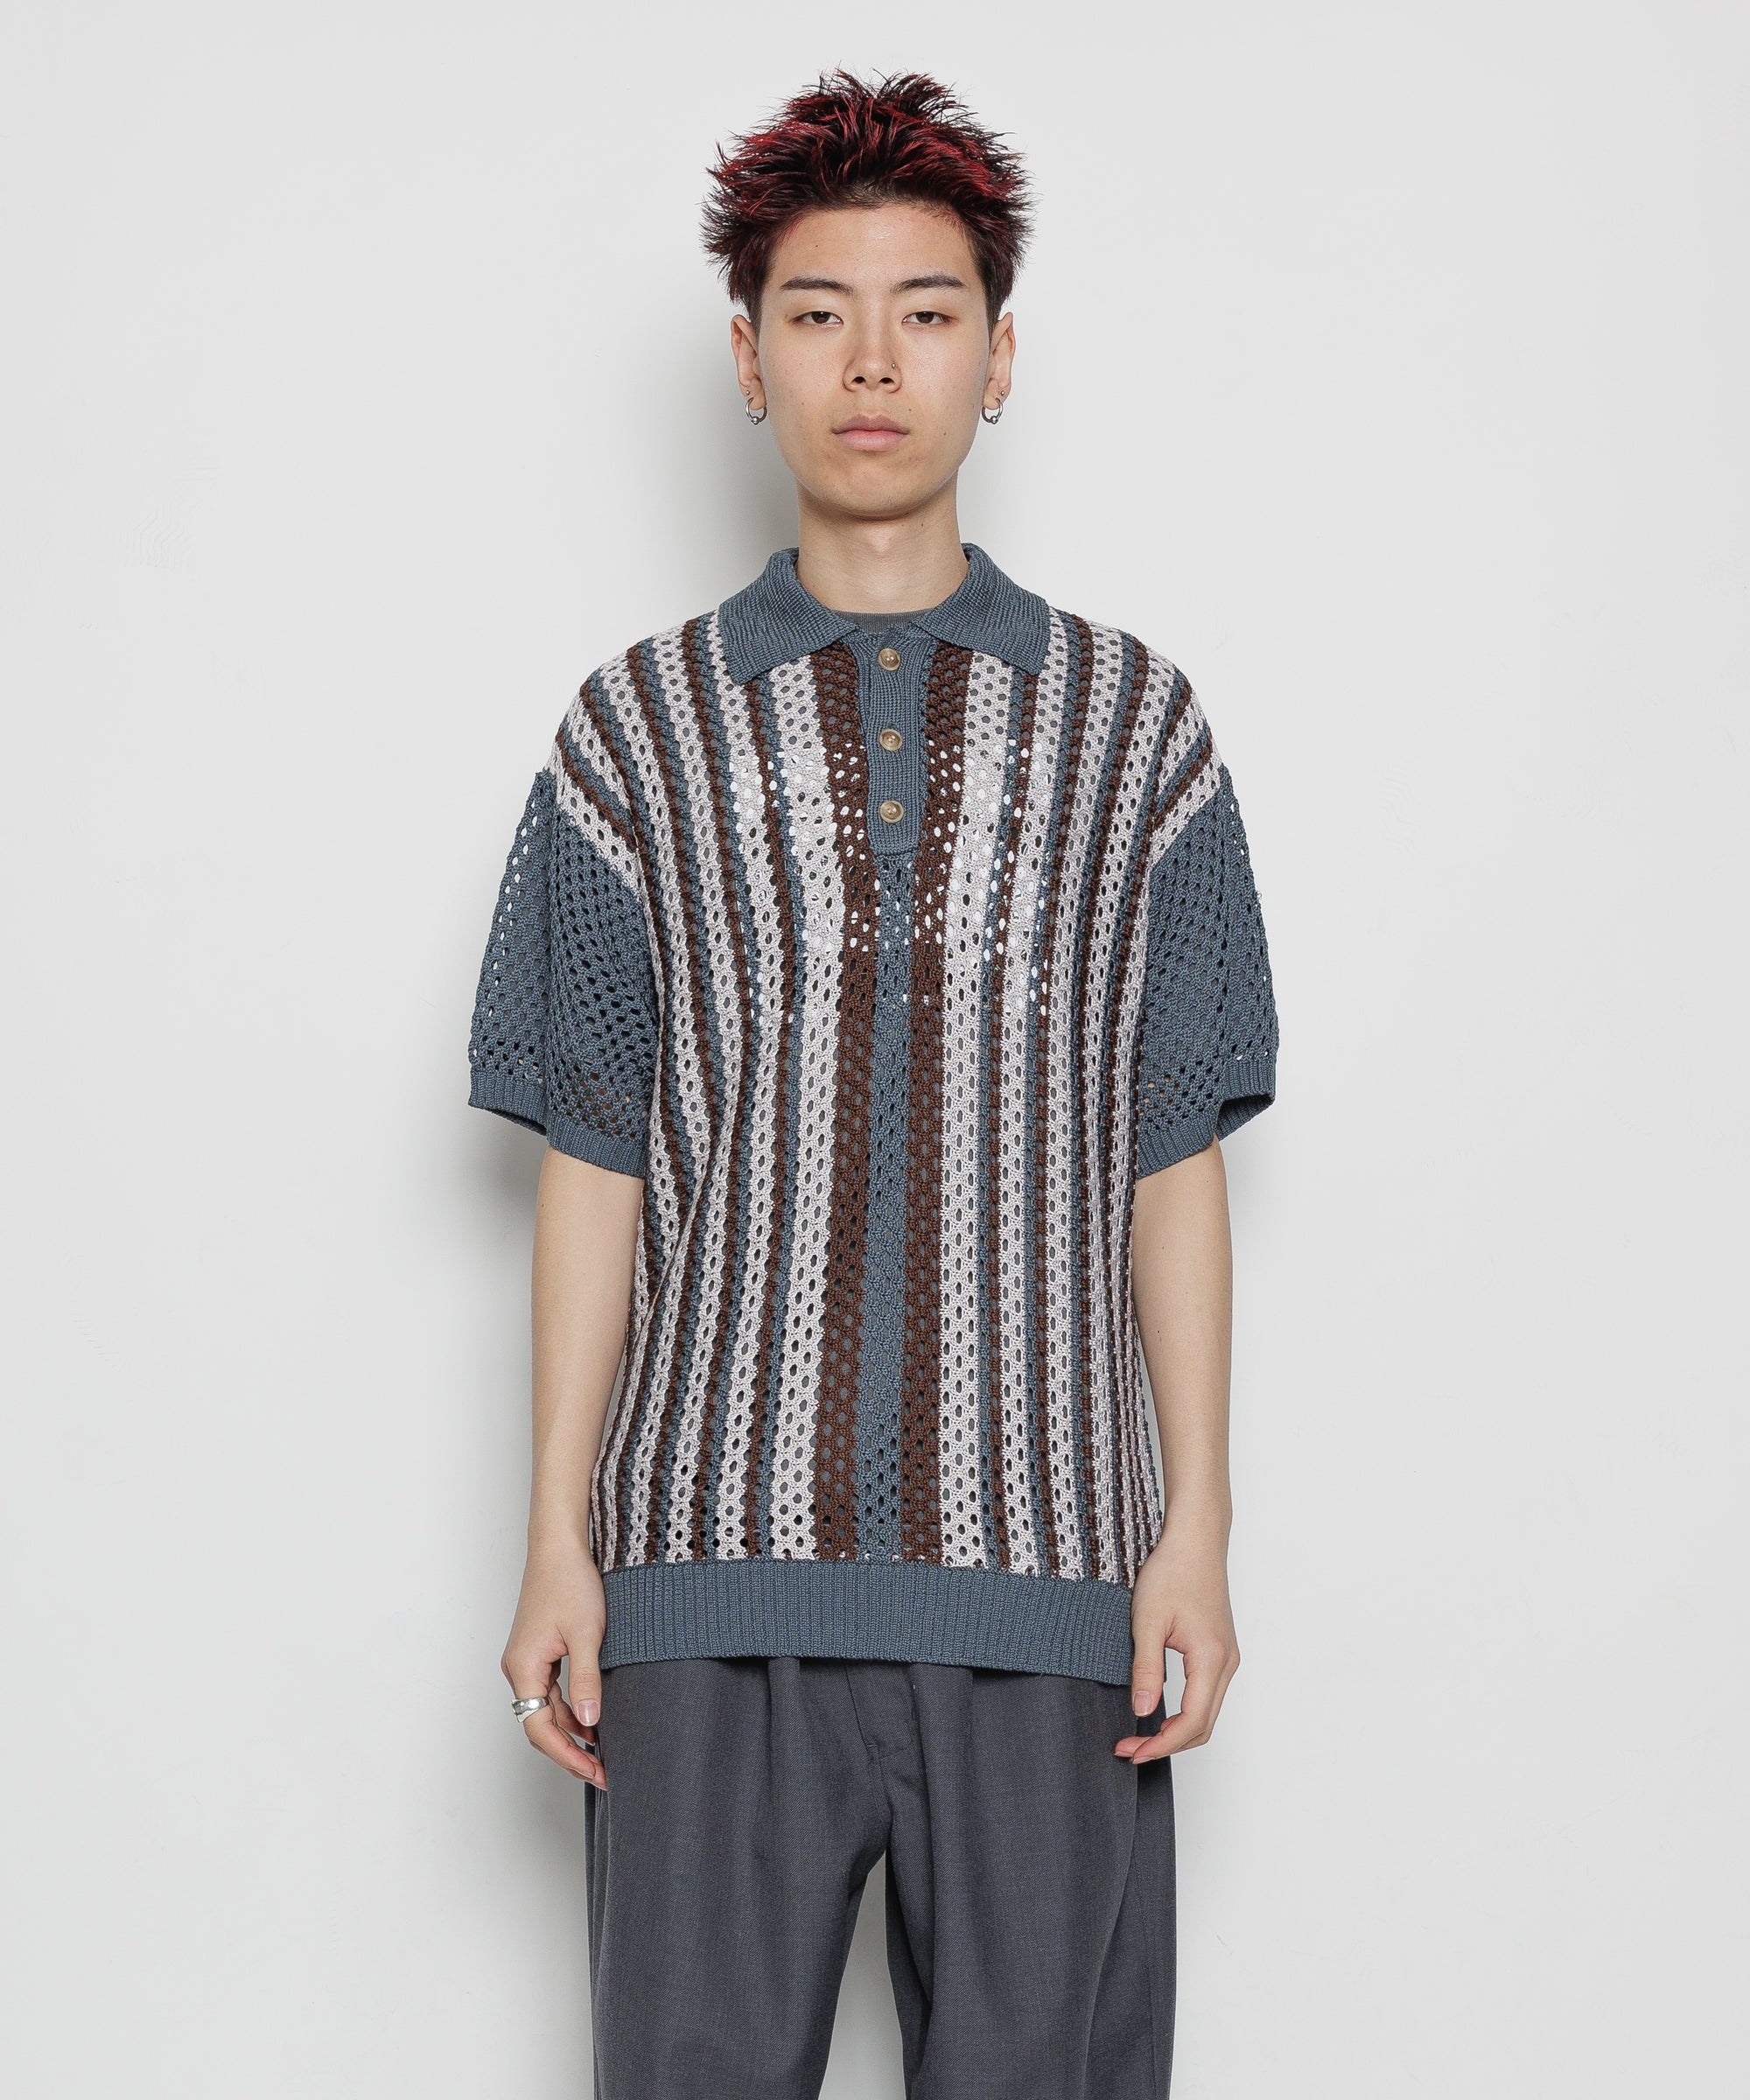 23cm60's/Summer Knit Stripe Polo shirt/ILGWU